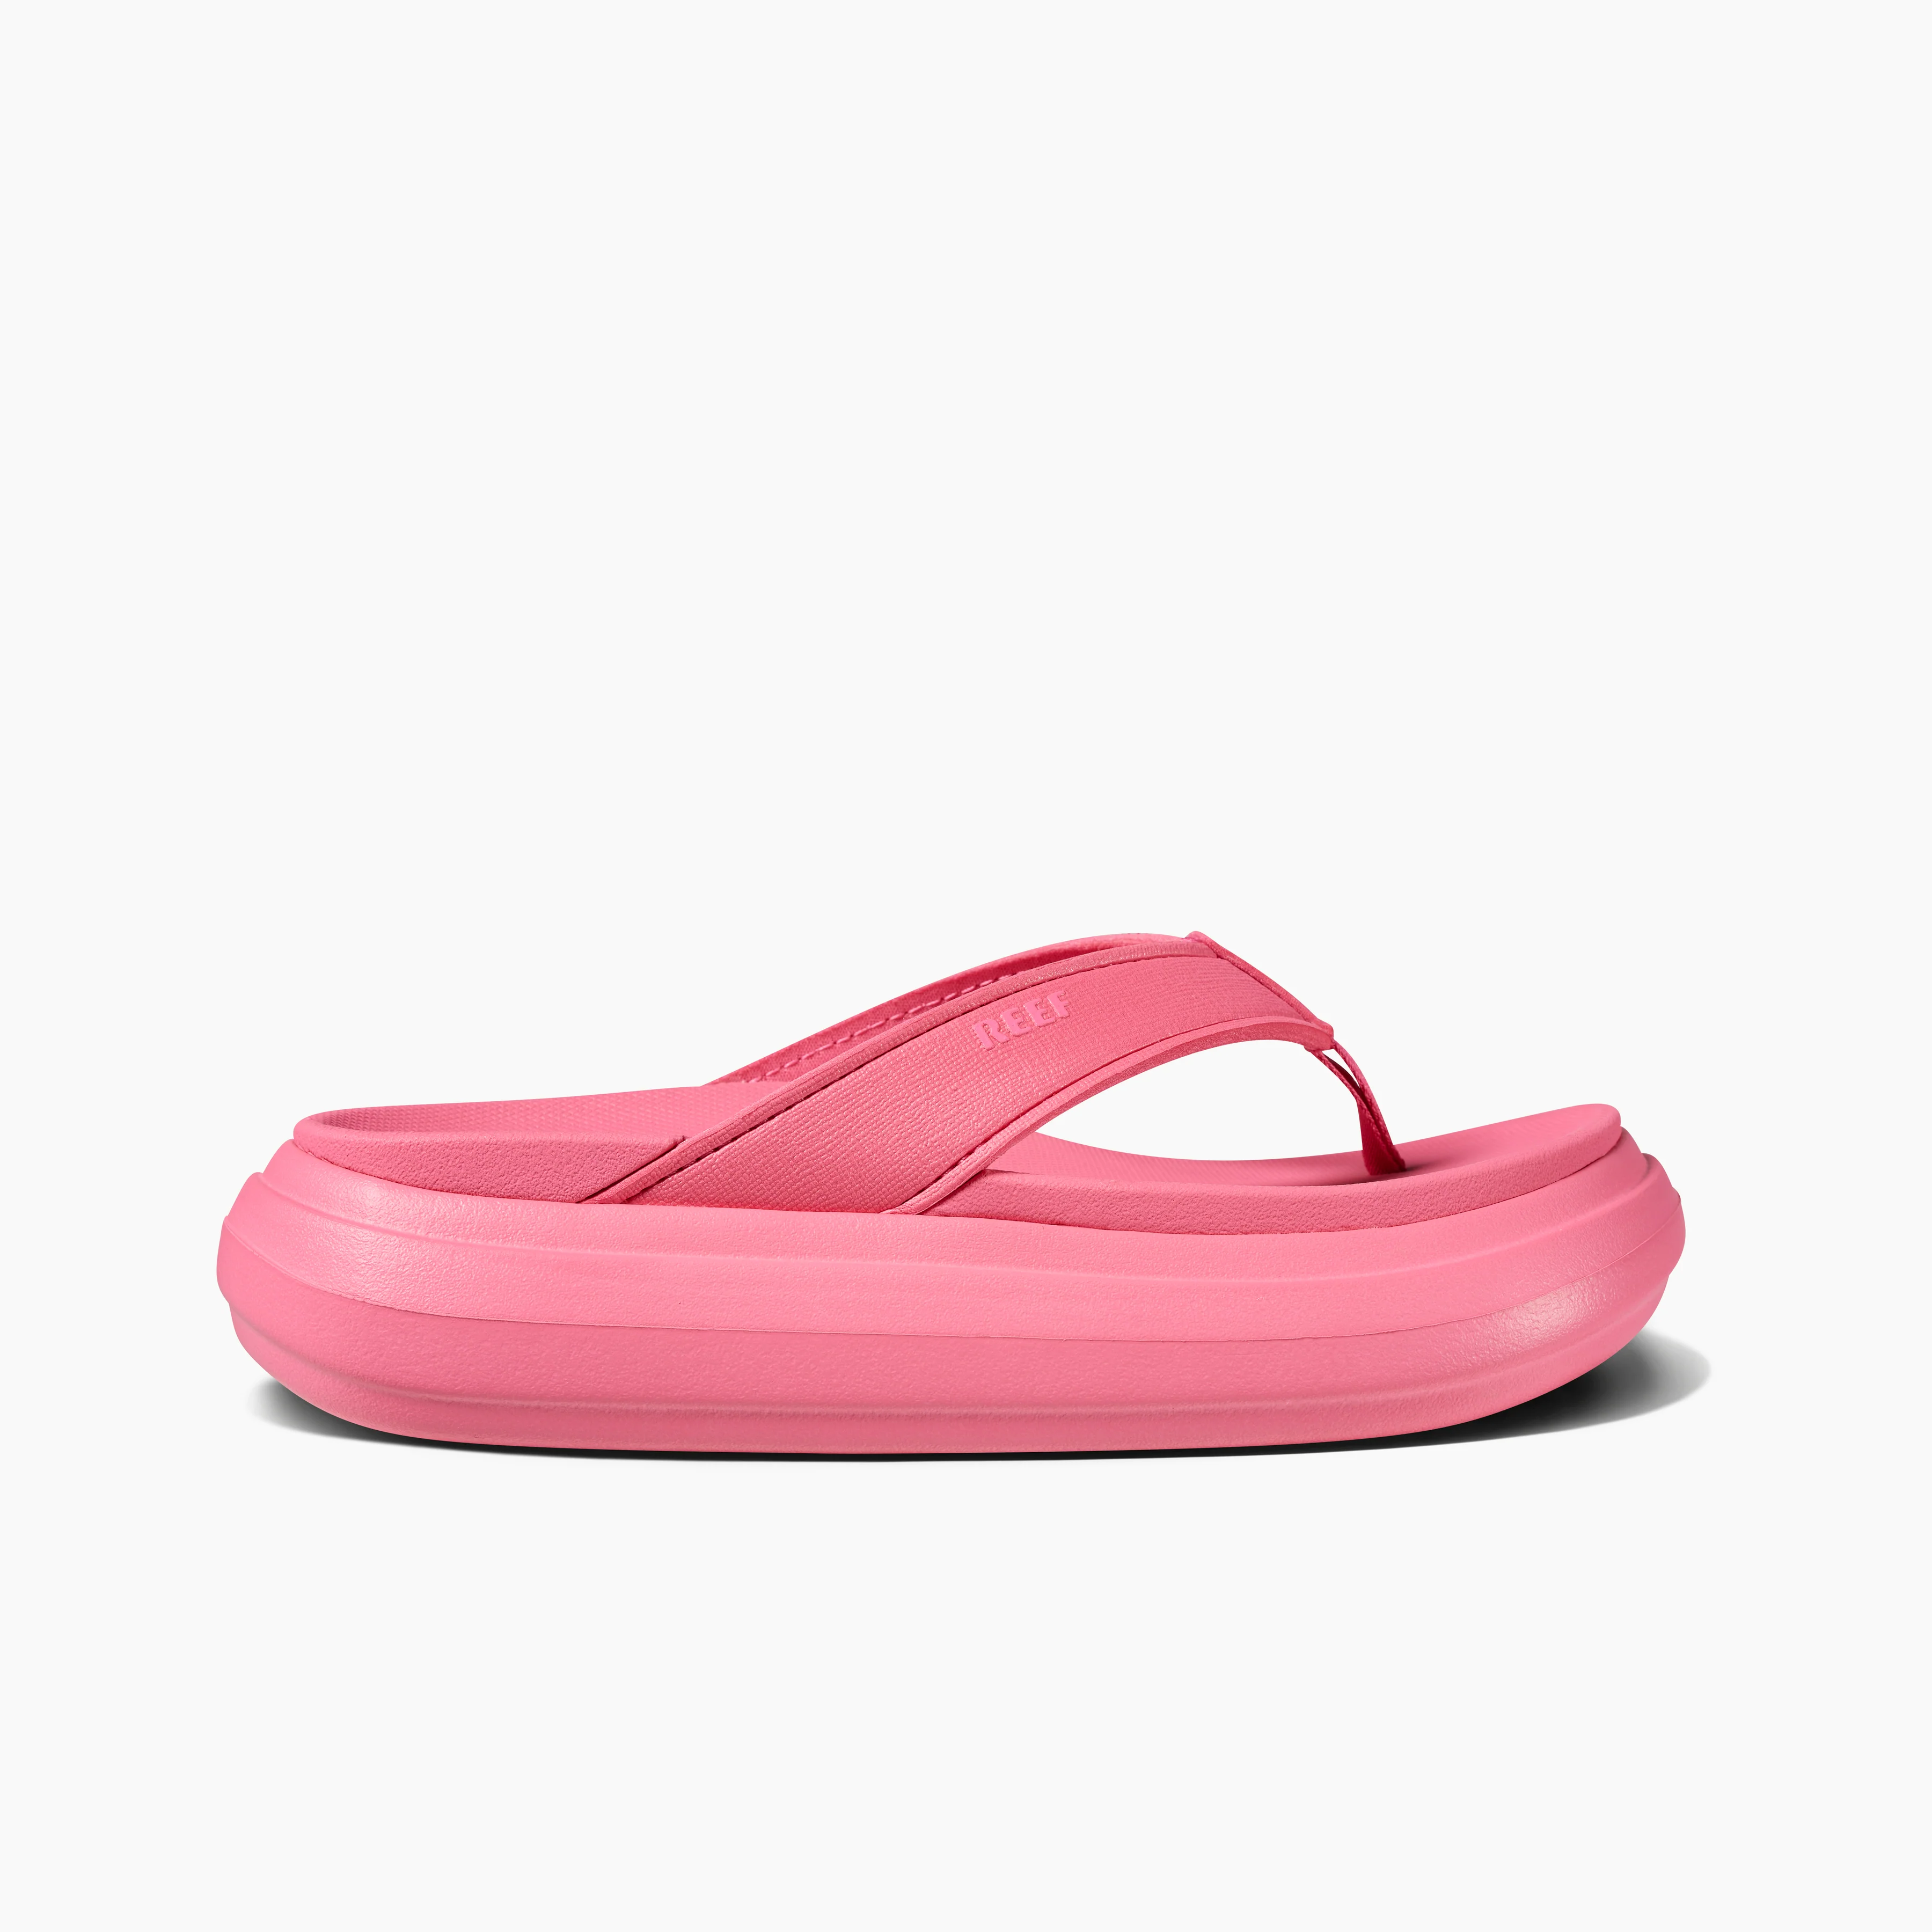 Women's Cushion Bondi Sandals in Hot Pink side view